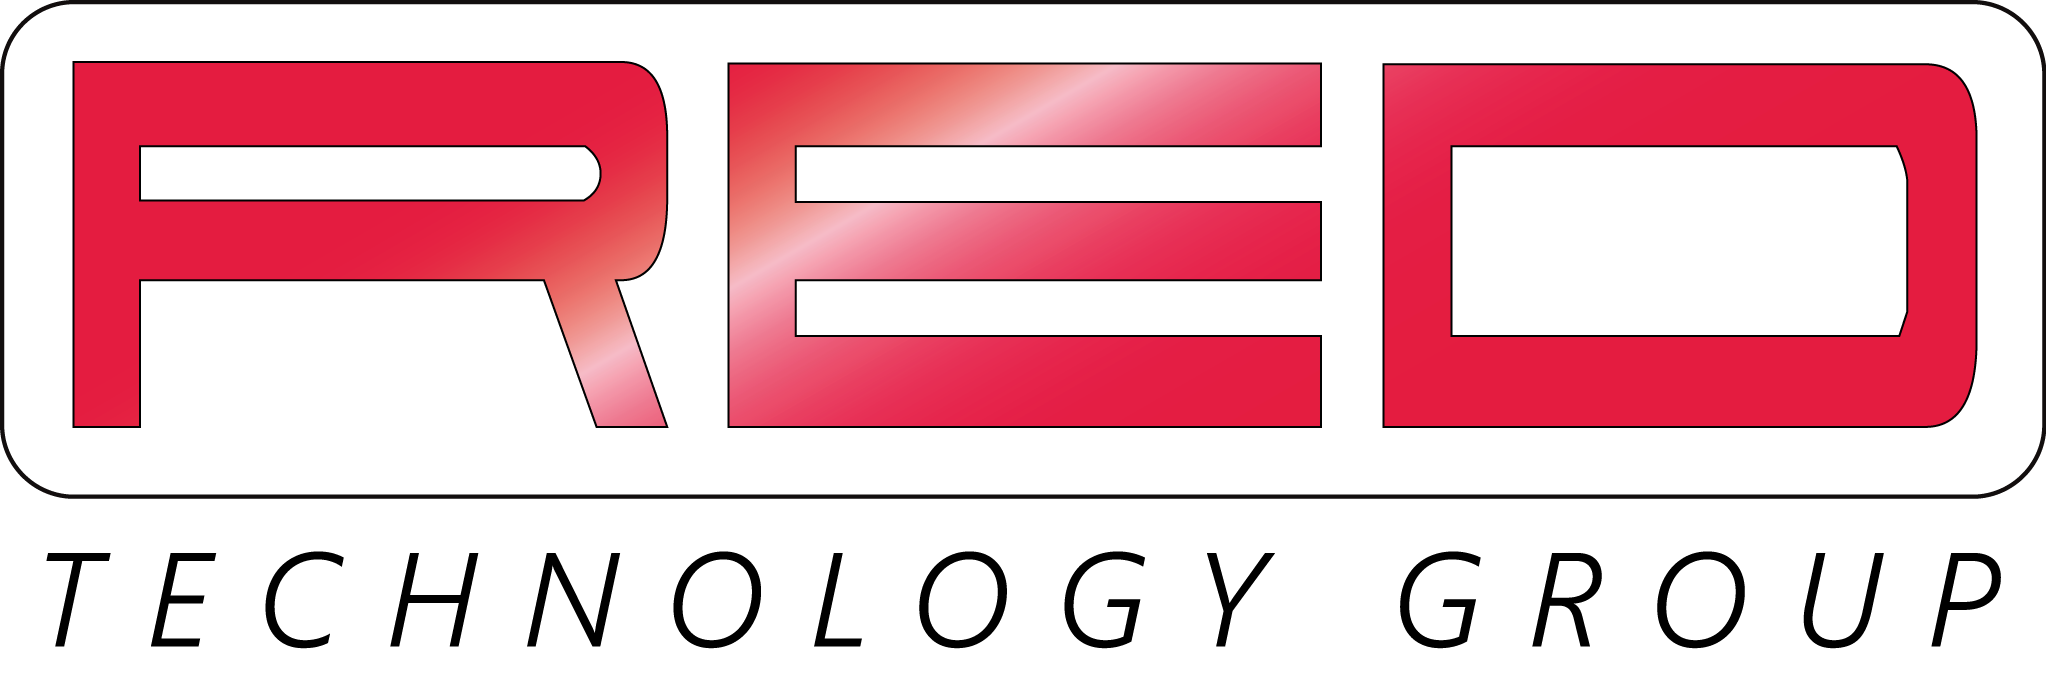 RED Tech Group logo_Final